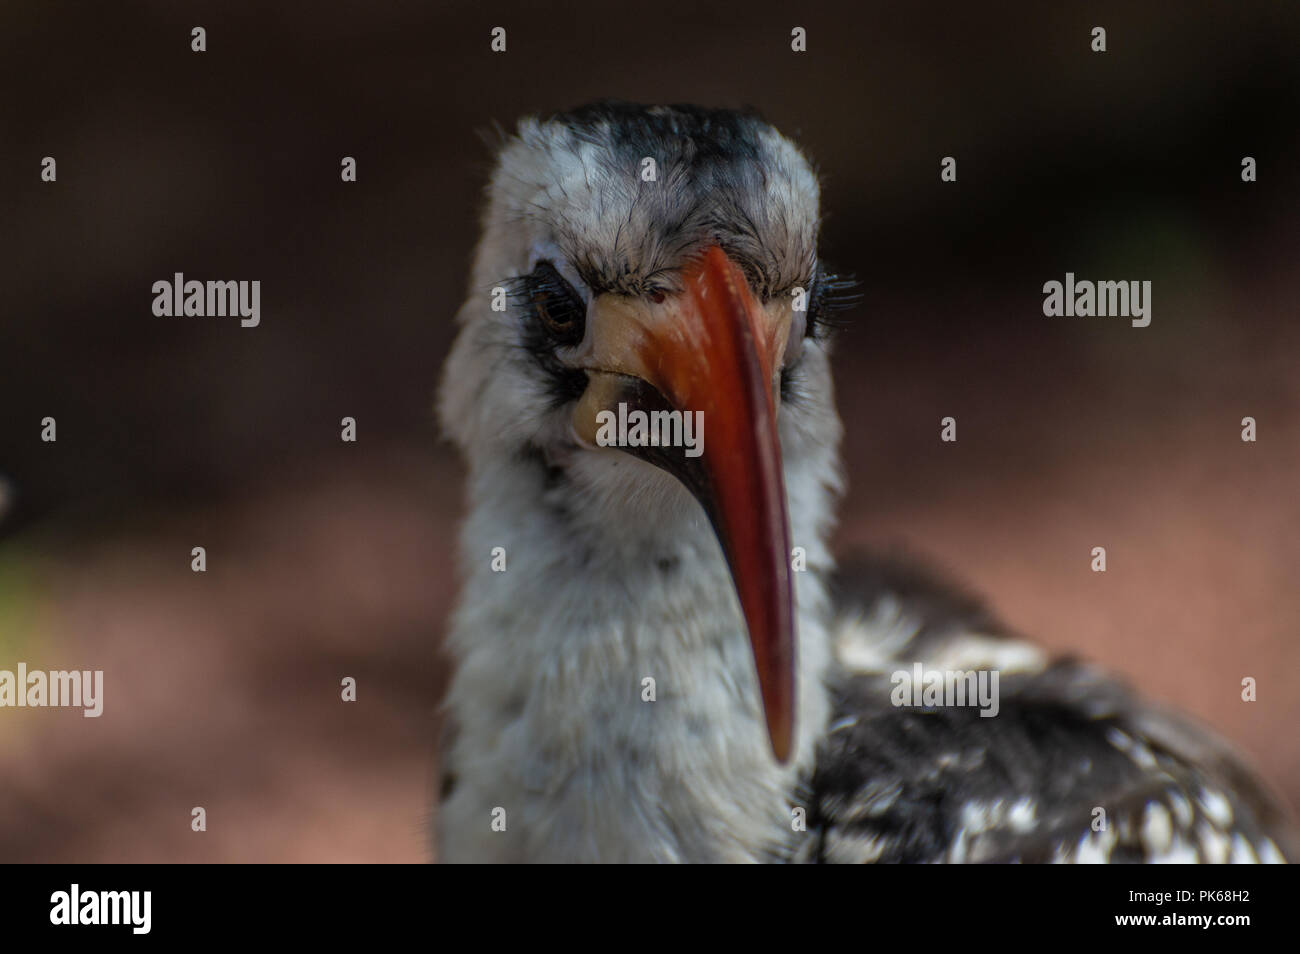 A close-up profile head shot of a Von Der Decken Hornbill. Stock Photo